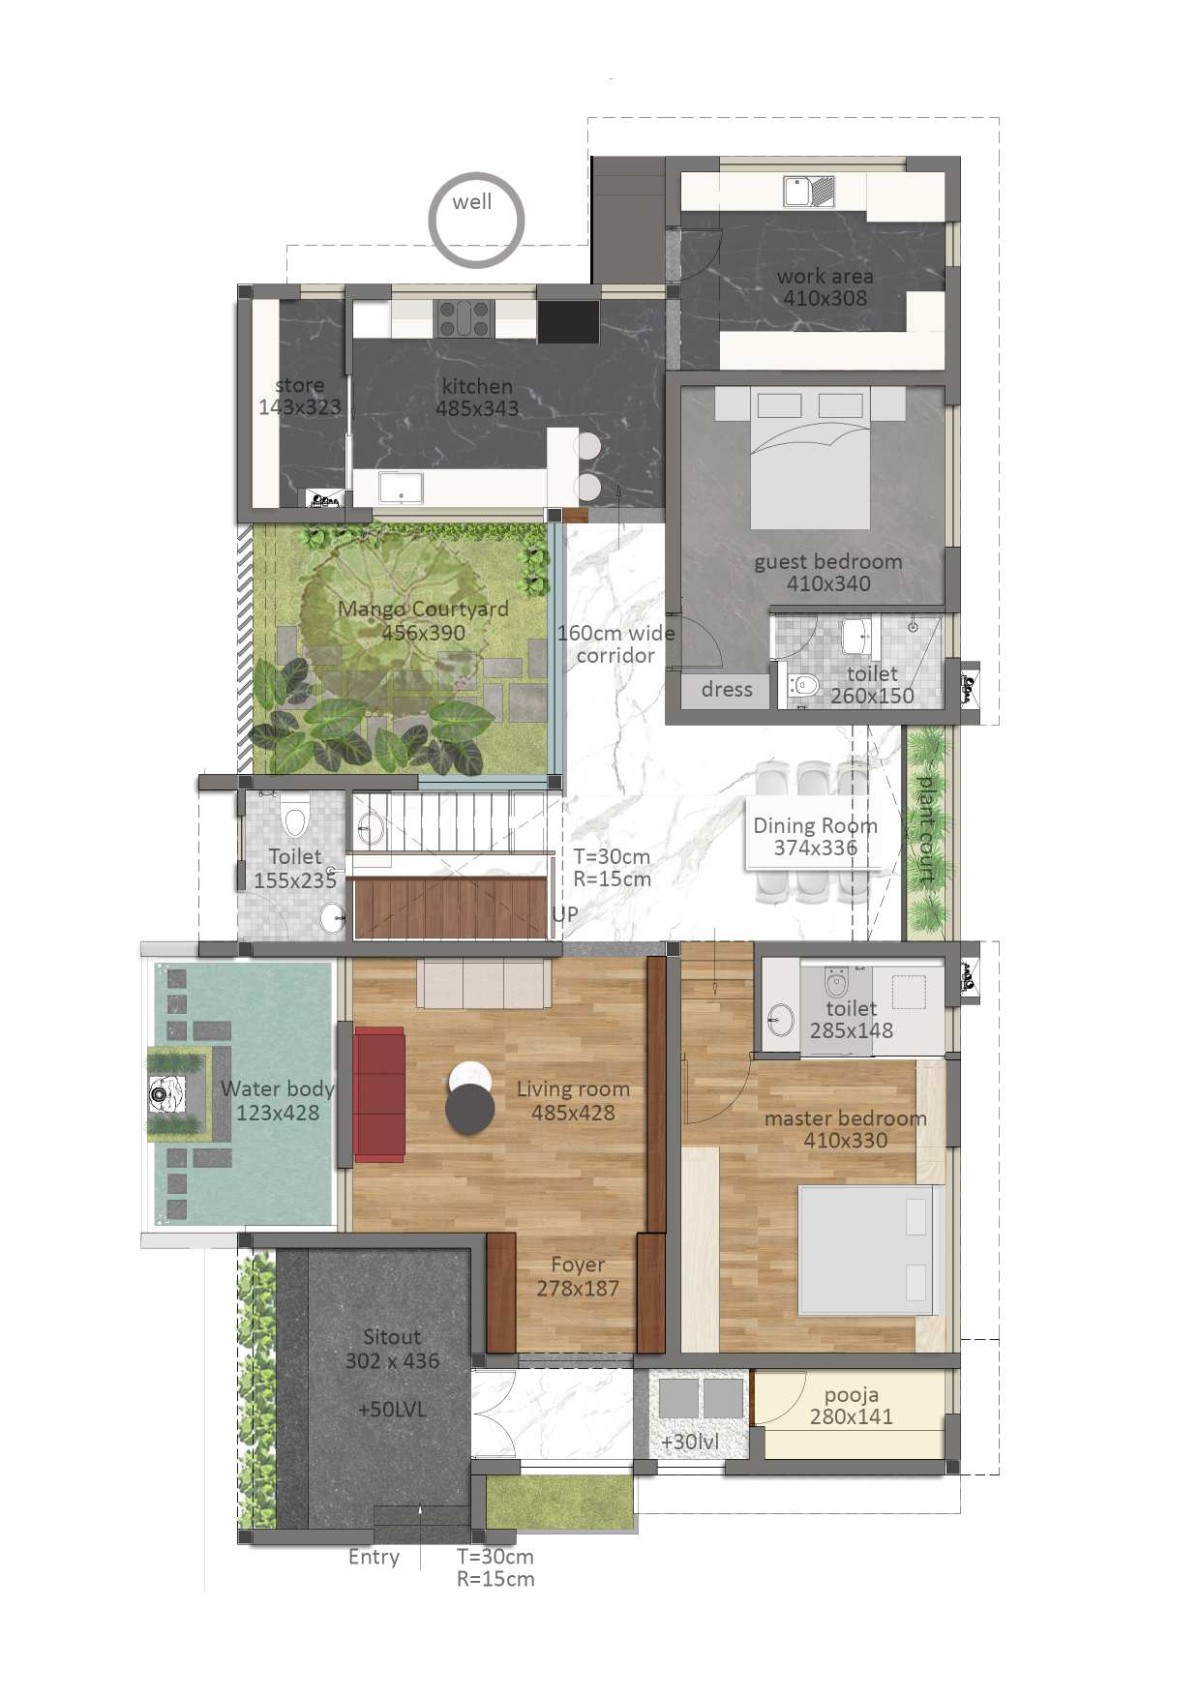 Ground floor plan of The Pravasi Home by Studio Vista Architects